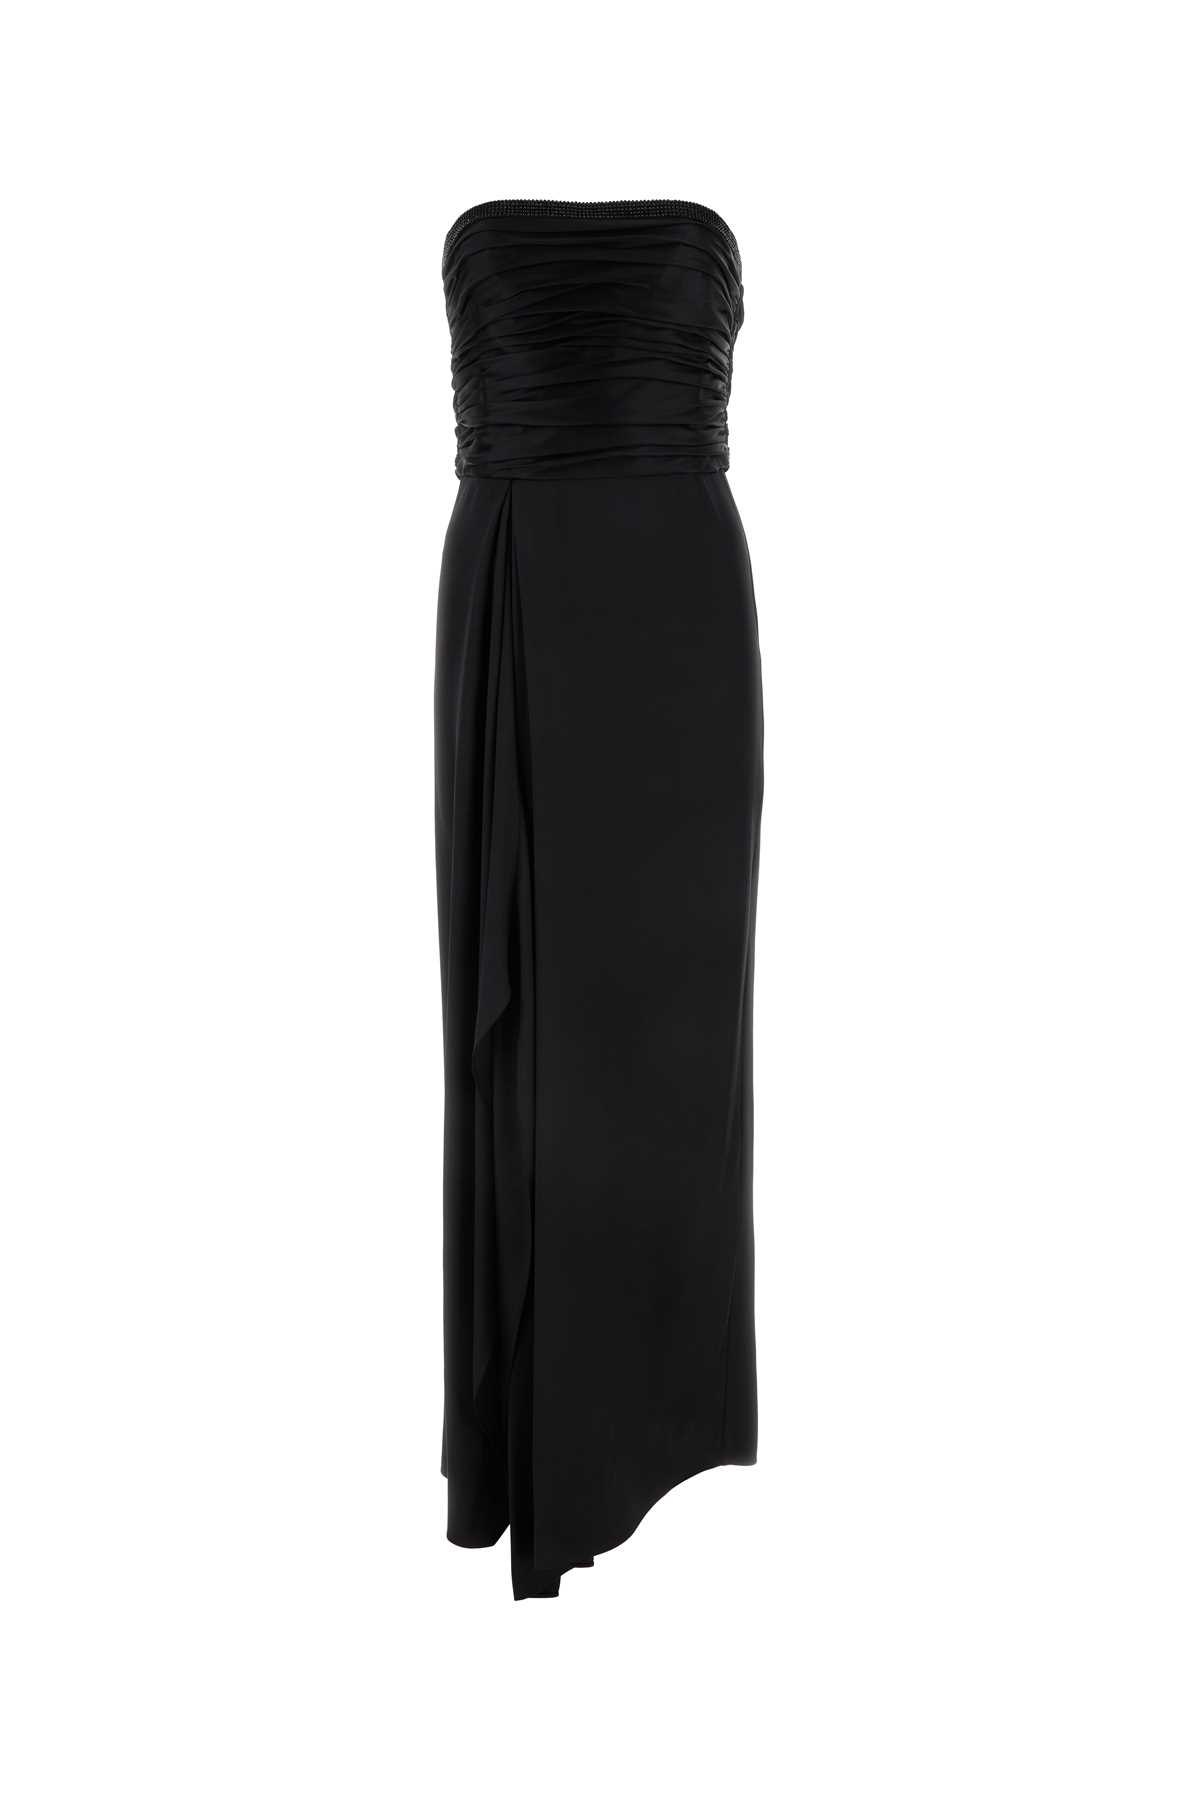 Giorgio Armani Black Satin Long Dress